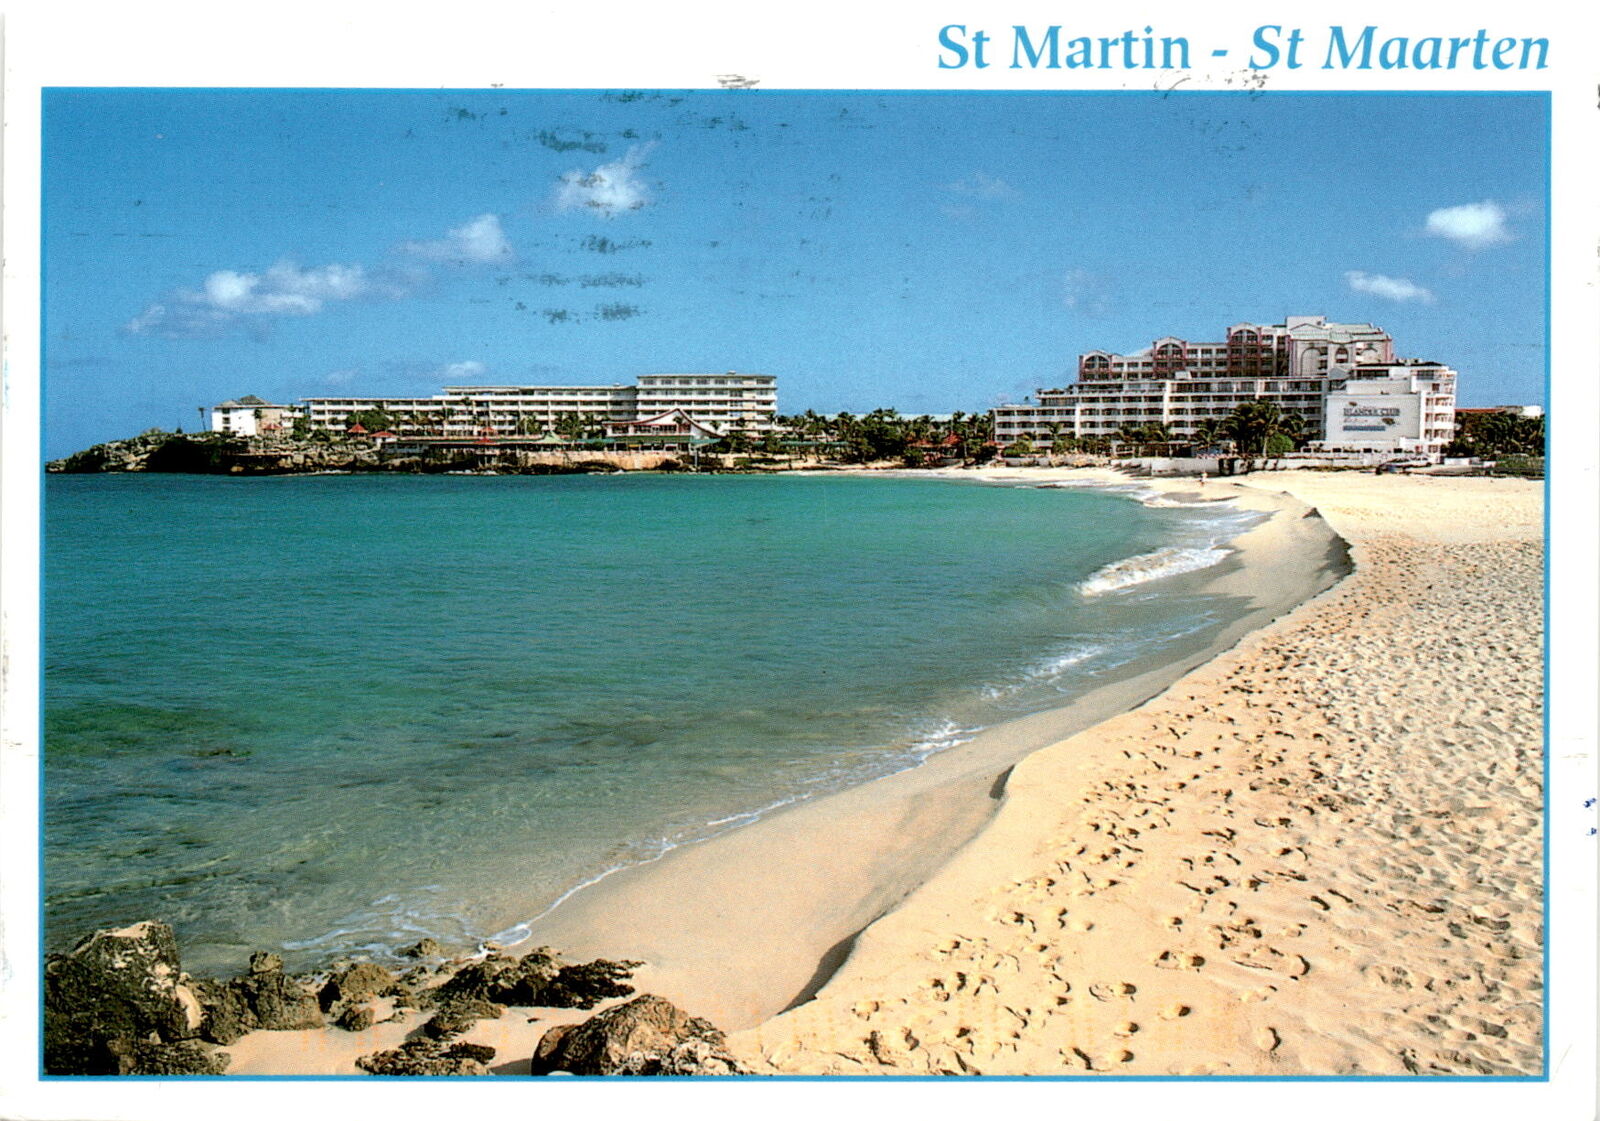 St. Martin/Sint Maarten, Aft Coeur hotel, French side, hot weather,  Postcard